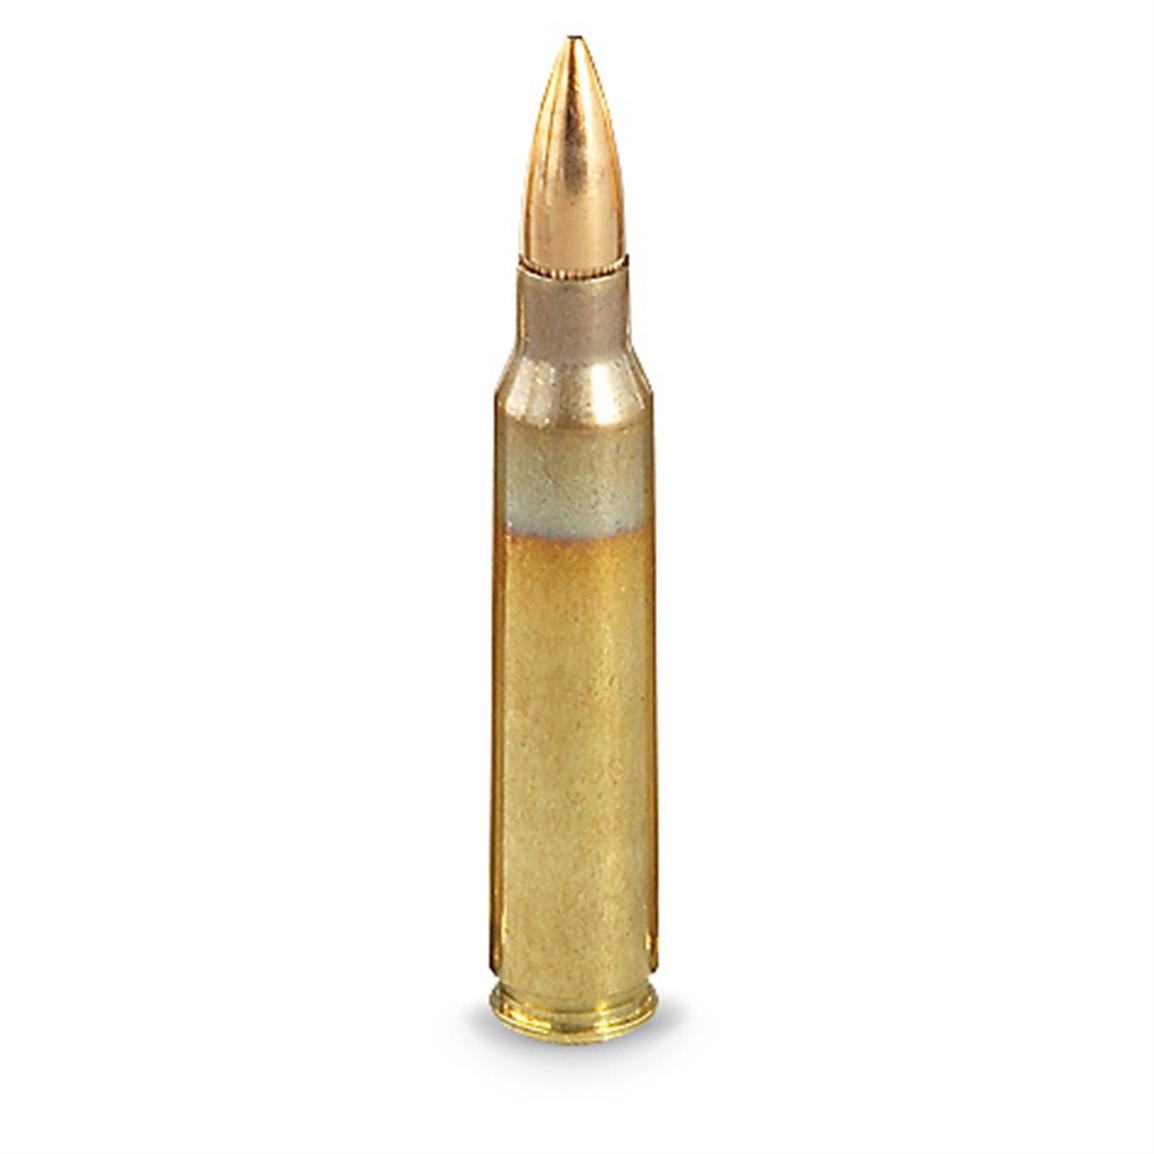 Winchester 223 556x45mm Fmj 55 Grain 100 Rounds 133516 223 5